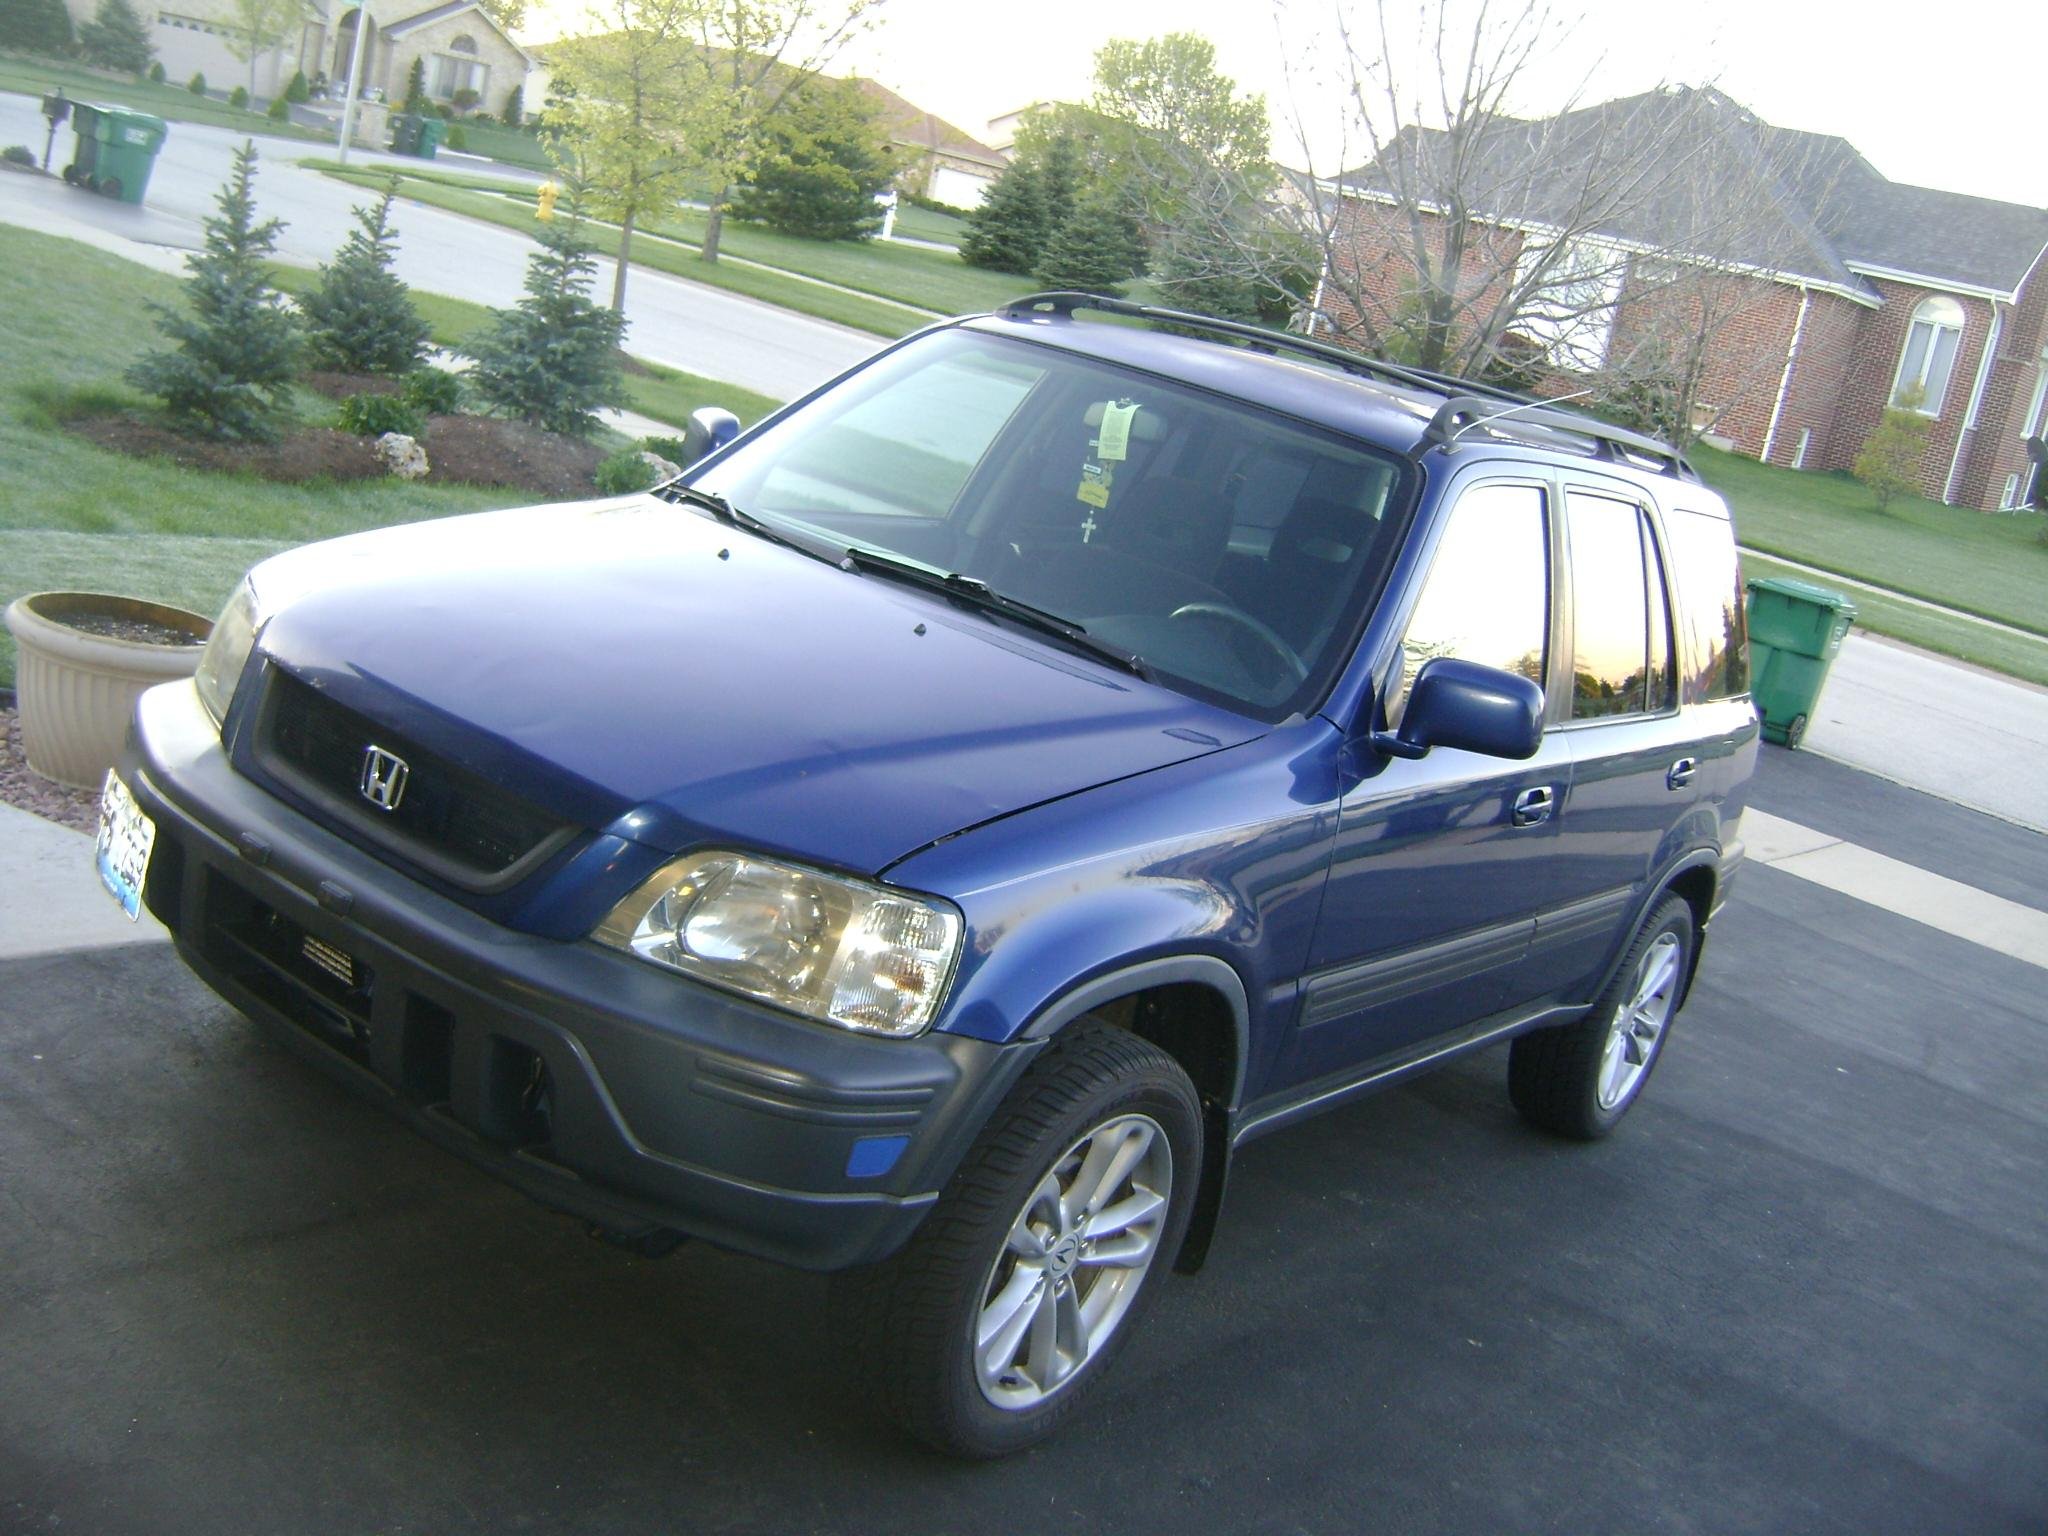 Хонда црв 2001 год. Honda CR-V 1999. Honda CRV 1998. Honda CR-V 1 1999. Honda CRV 2001.